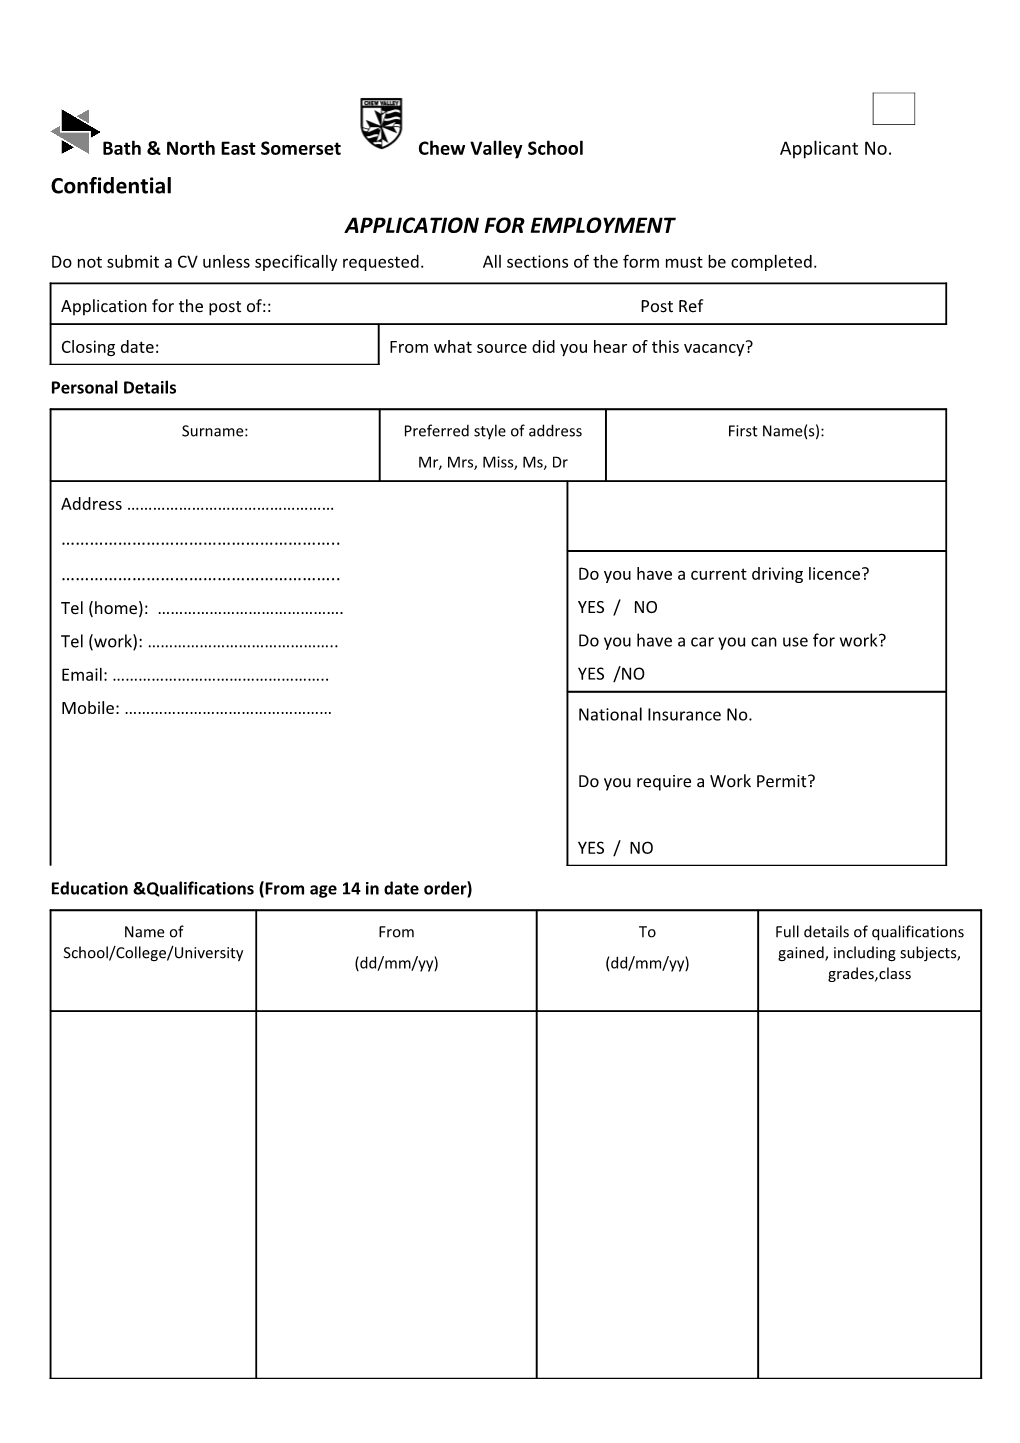 Bristol City Council Application for Employment